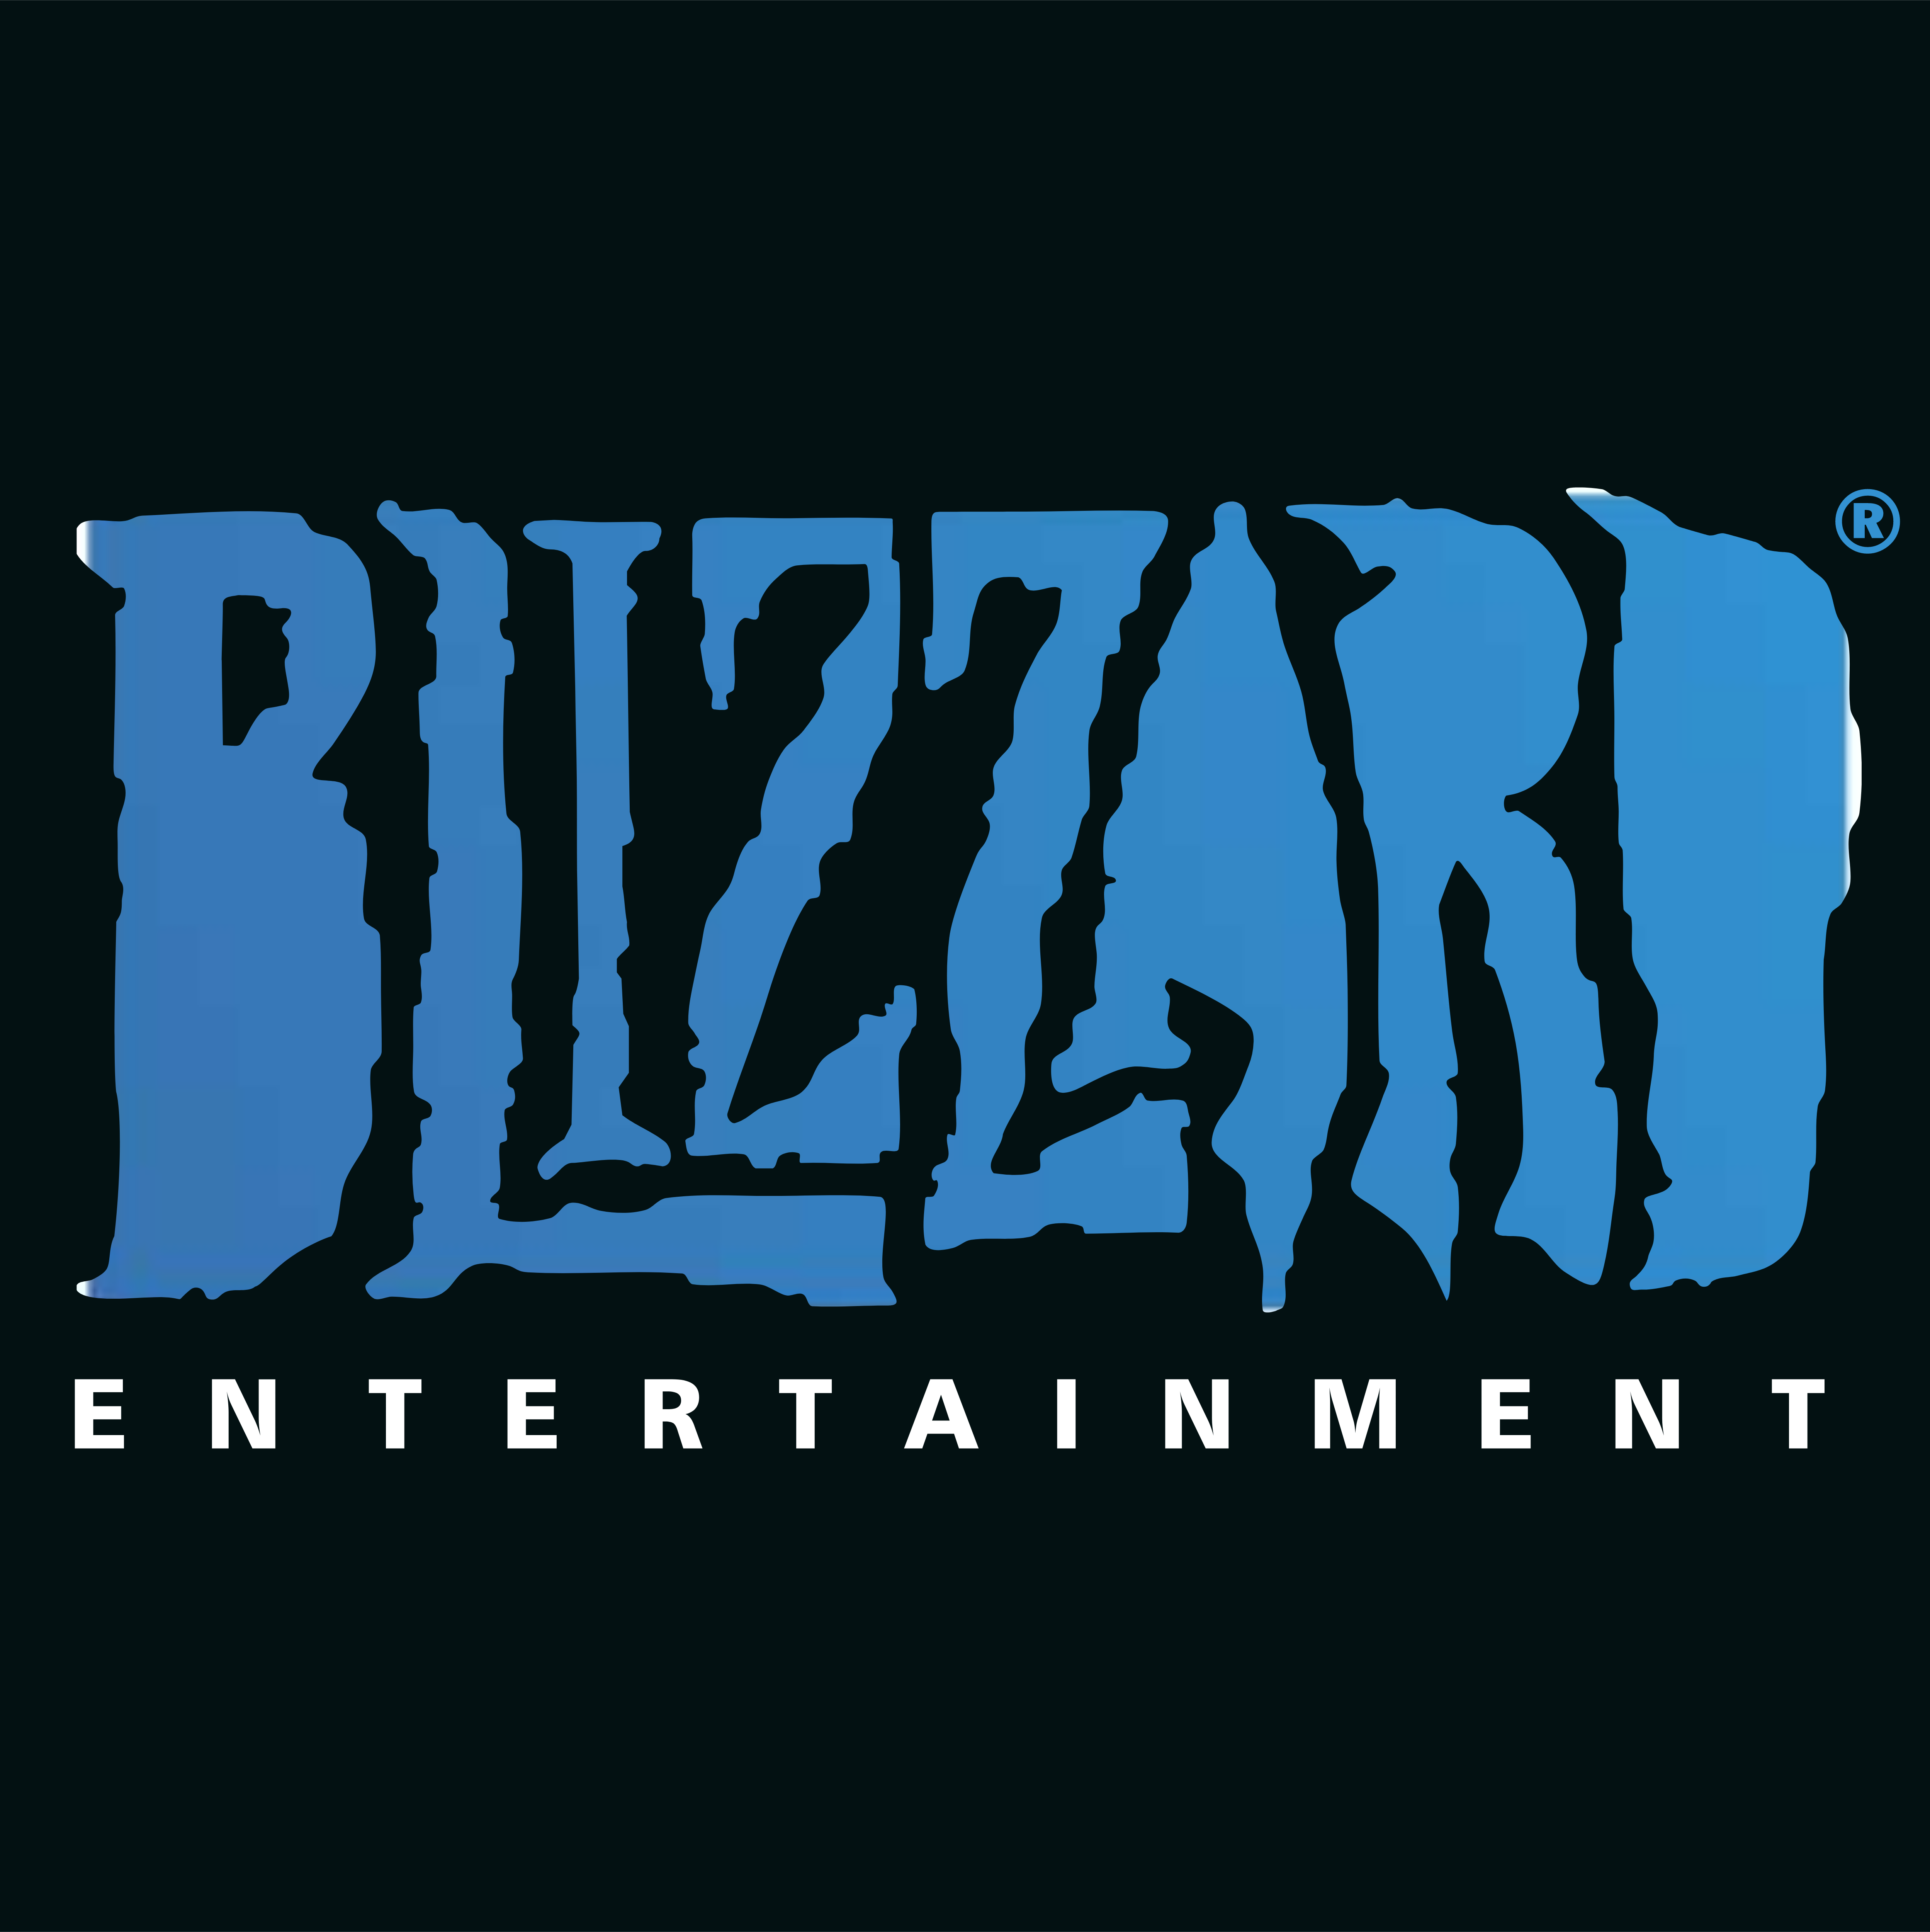 Blizzard Entertainment - Logos Download